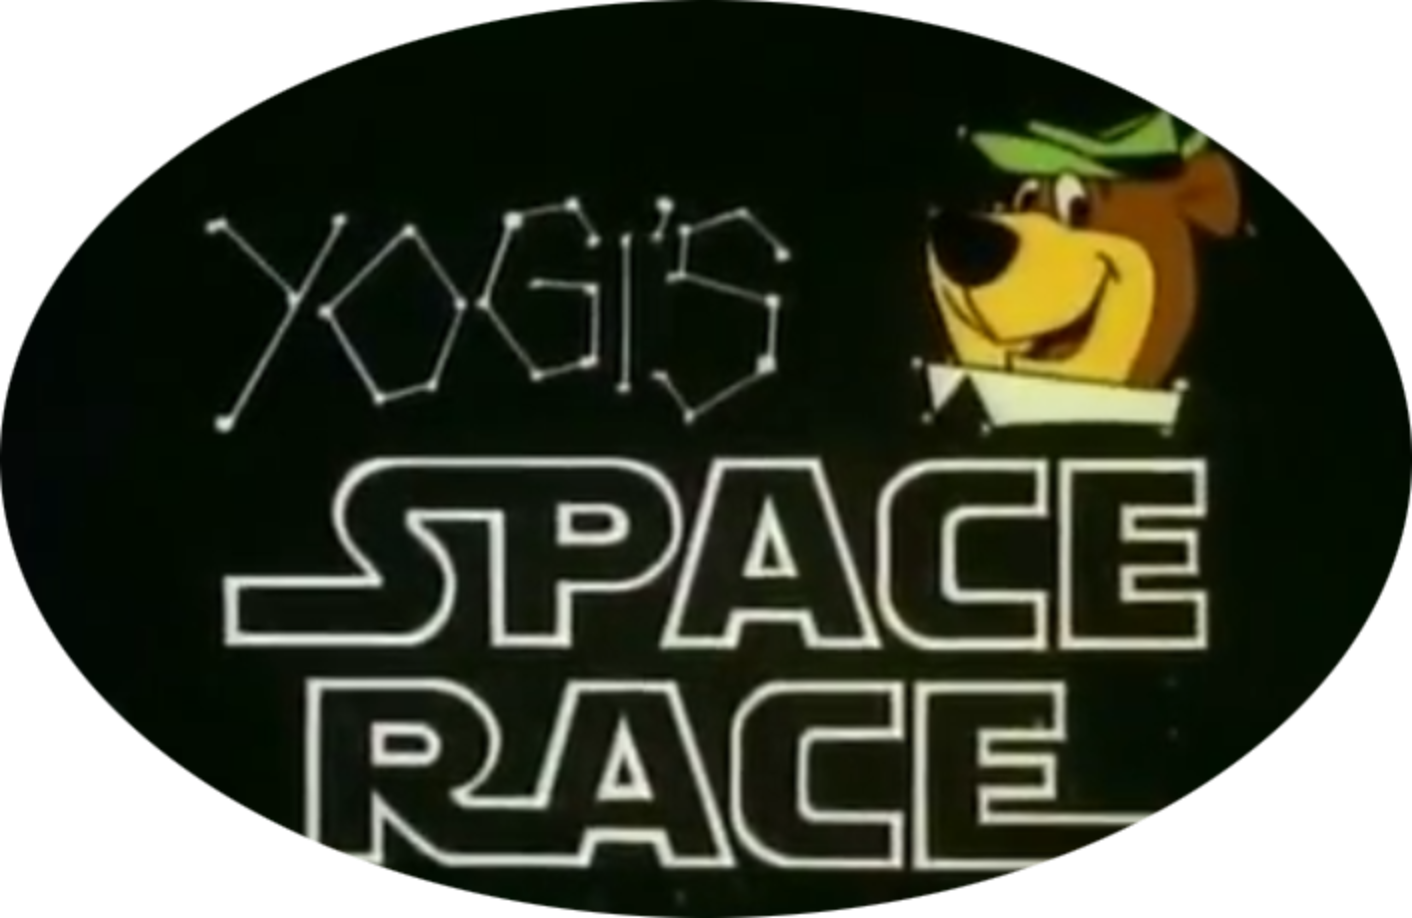 Yogi's Space Race (1 DVD Box Set)